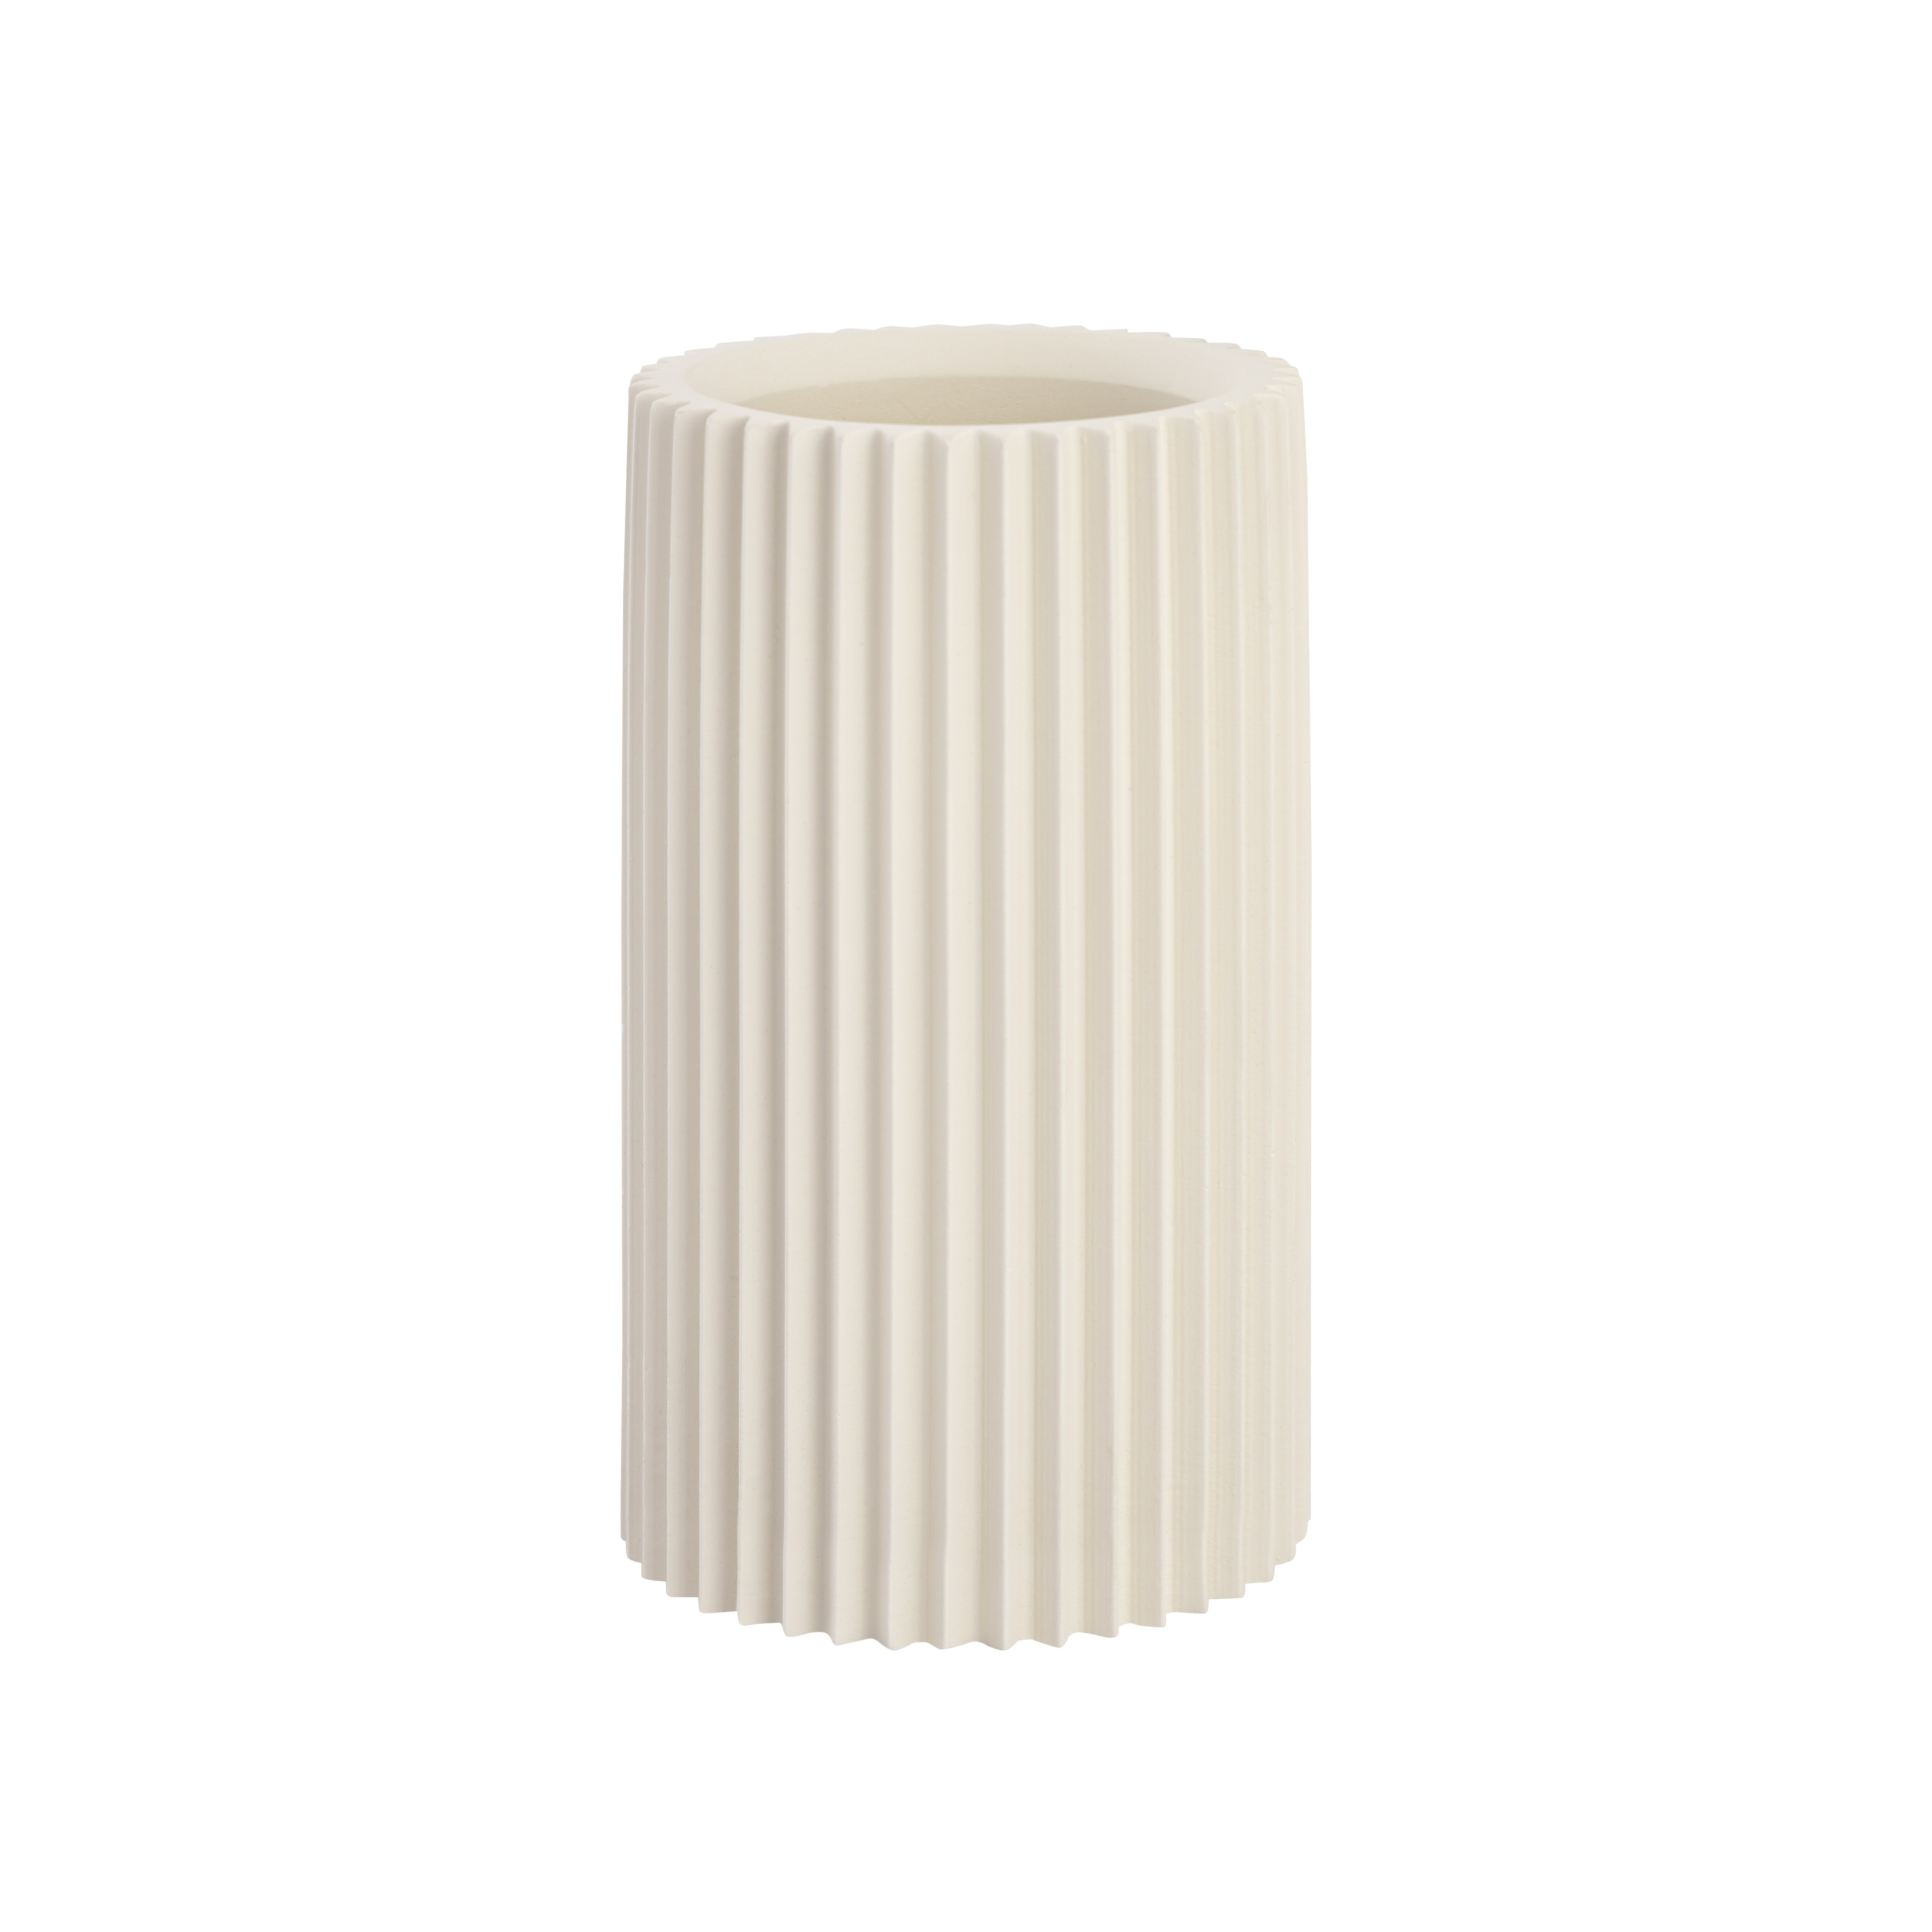 image of Jenna White Concrete Table Vase with sku:TOV-C18426